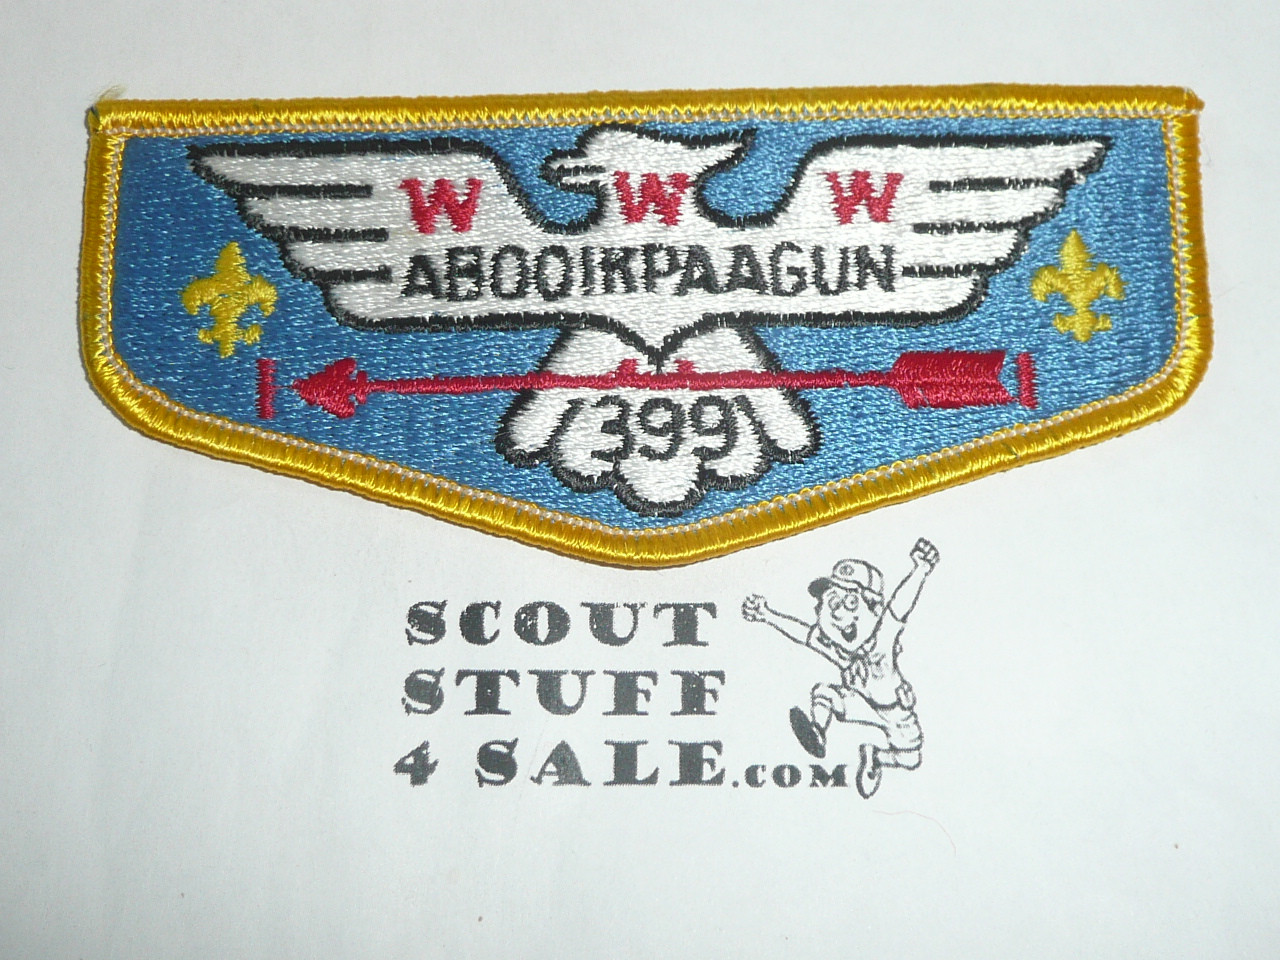 Order of the Arrow Lodge #399 Abooikpaagun s8 Flap Patch - Boy Scout